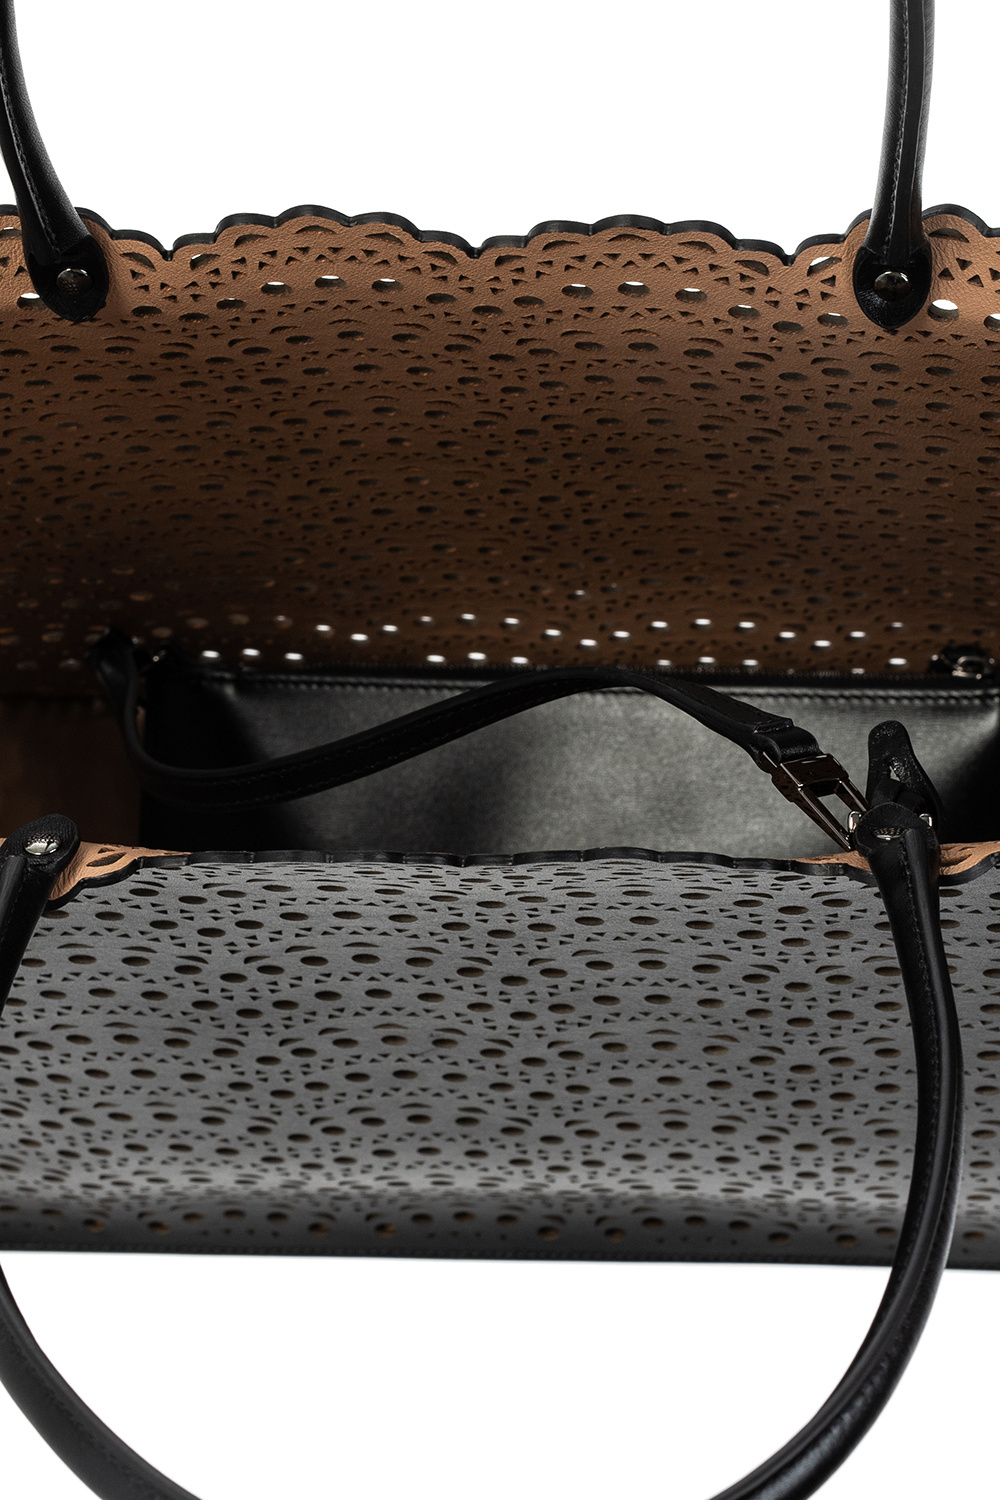 Alaia ‘Garance 36’ leather hand bag